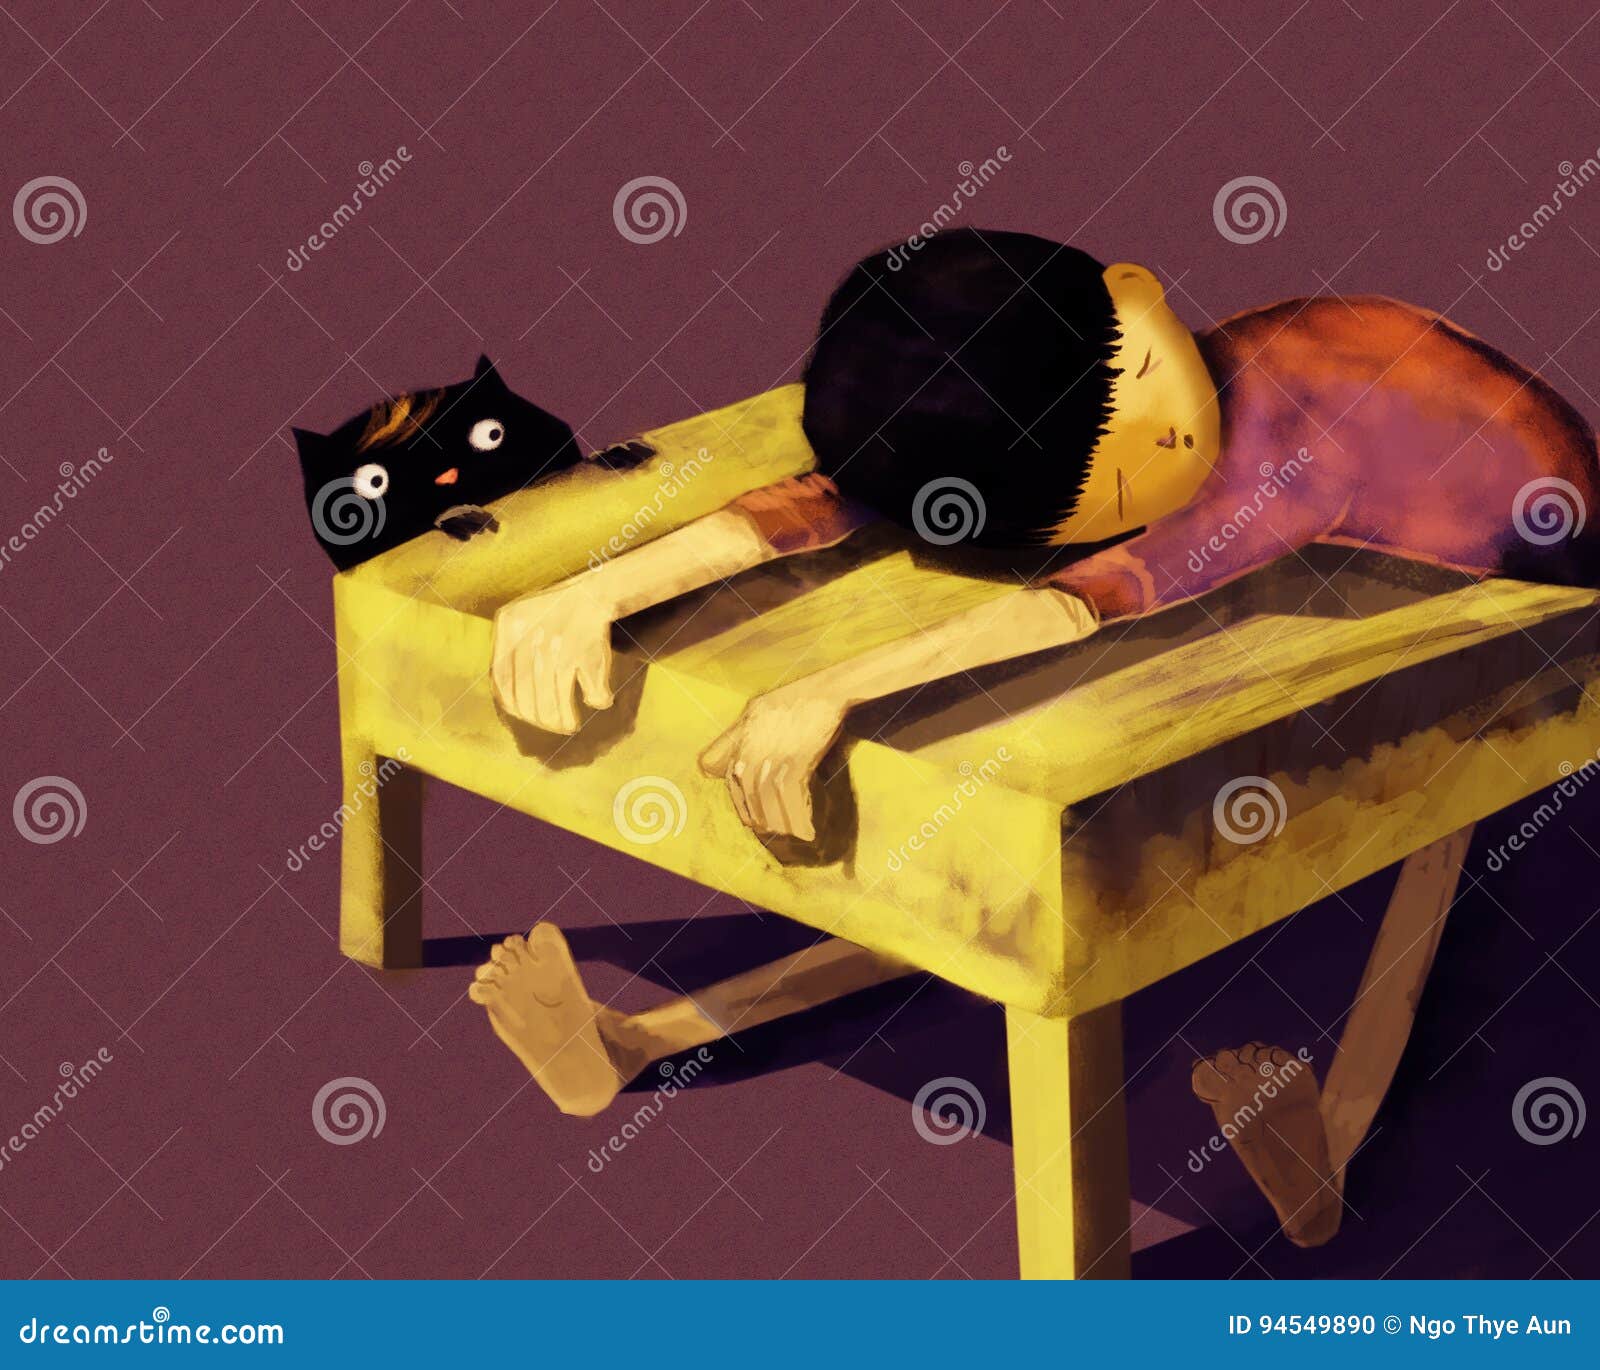 Lazy Boy Sleeping On Desk Stock Photo Image Of Cartoon 94549890